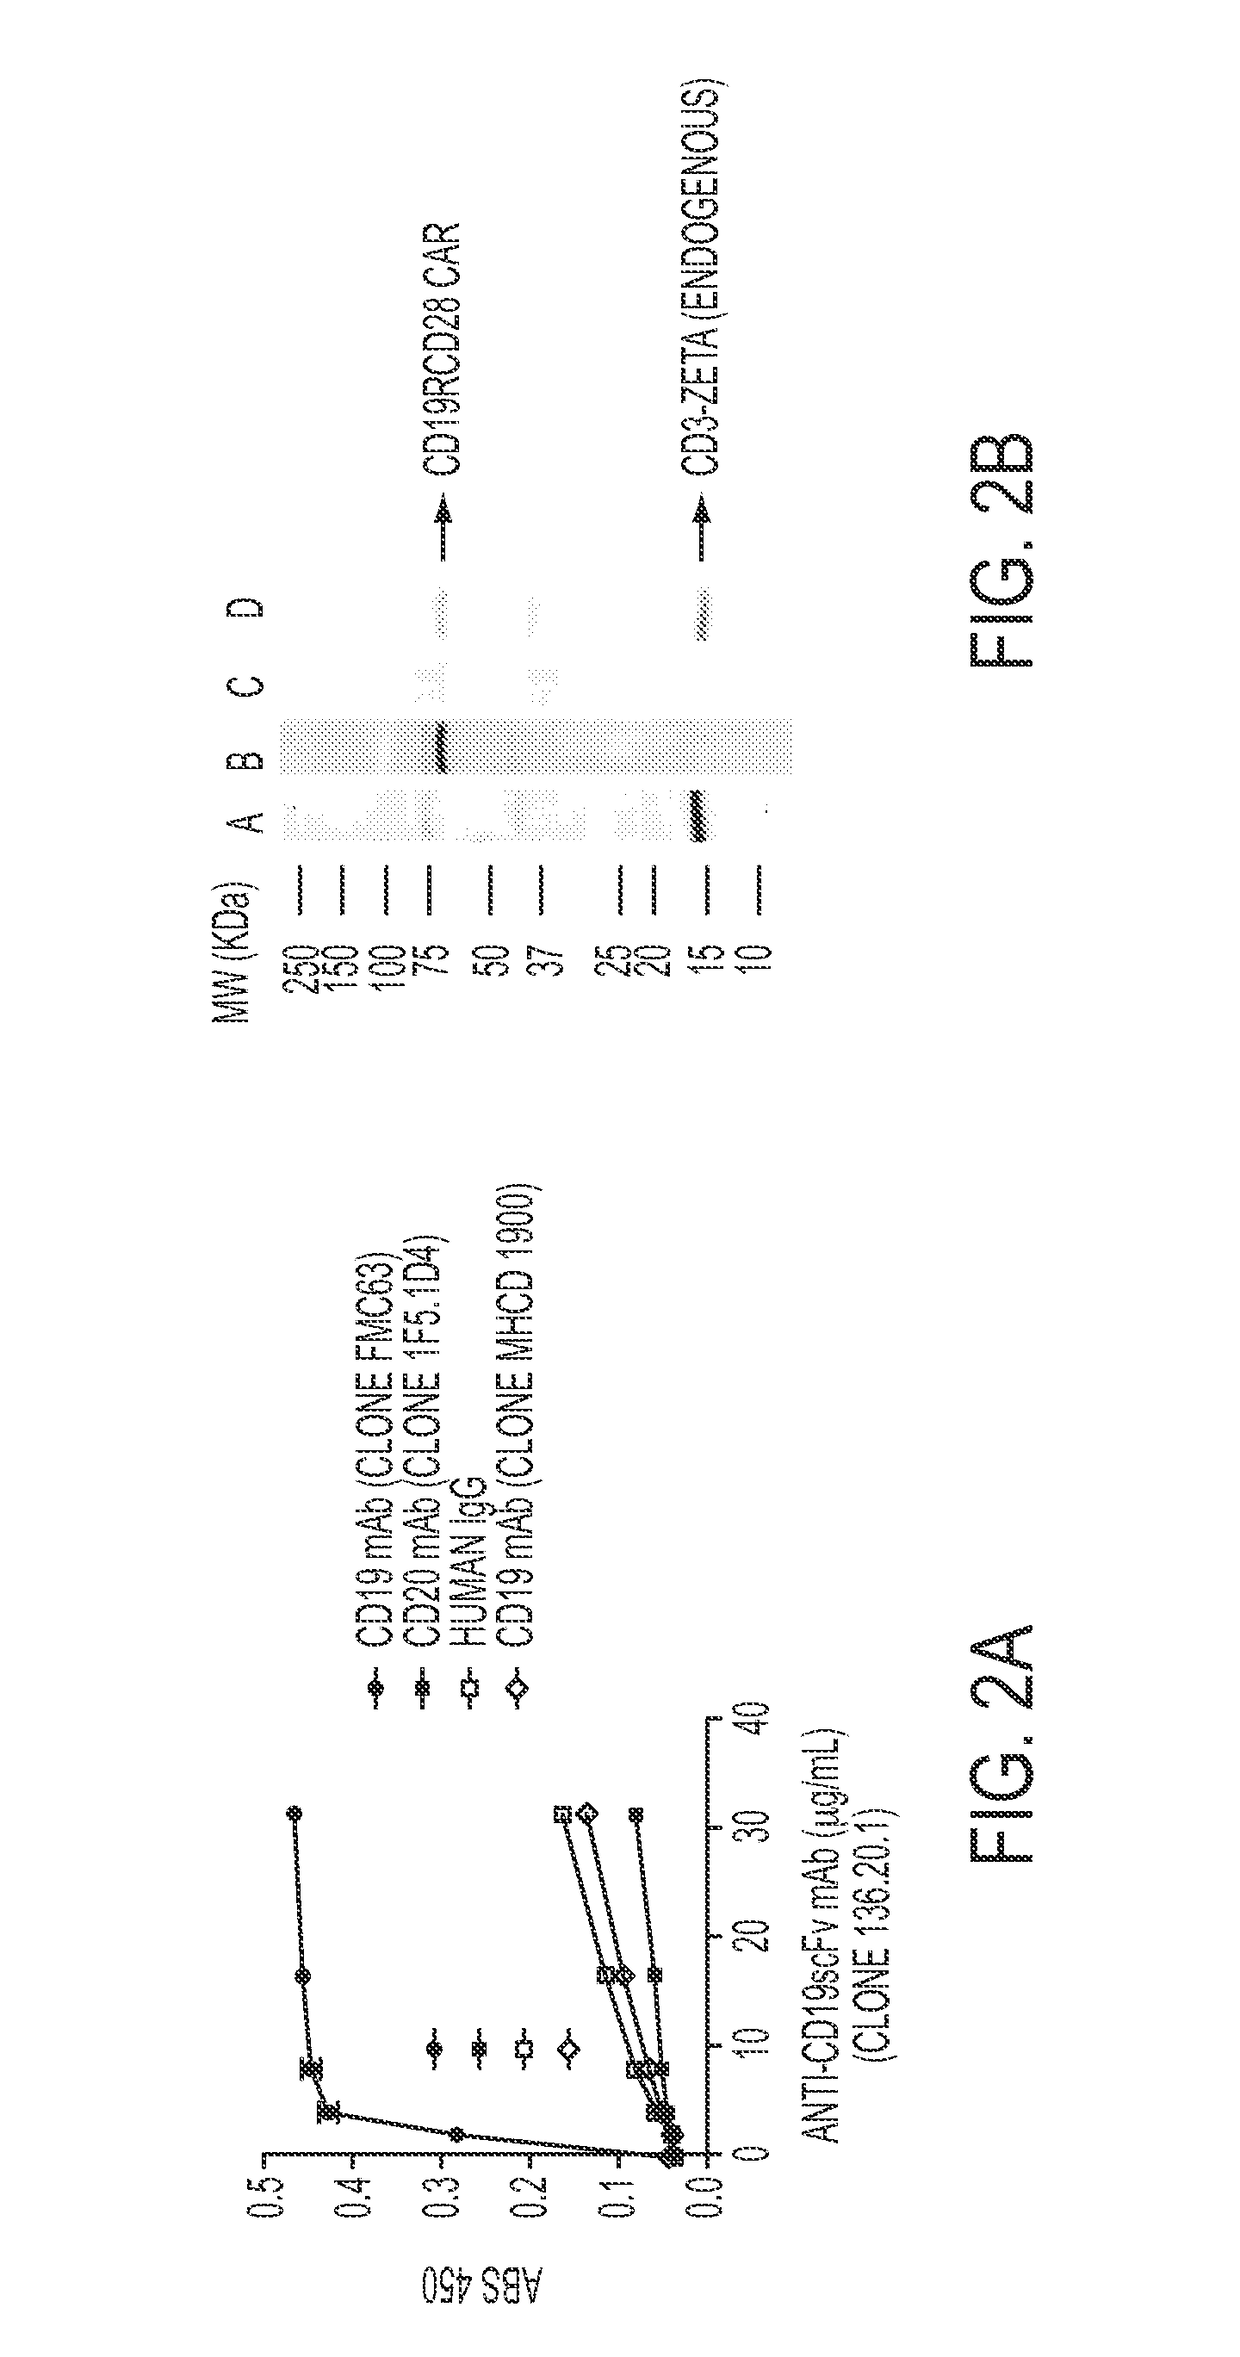 Anti-CD19 scFv (FMC63) polypeptide